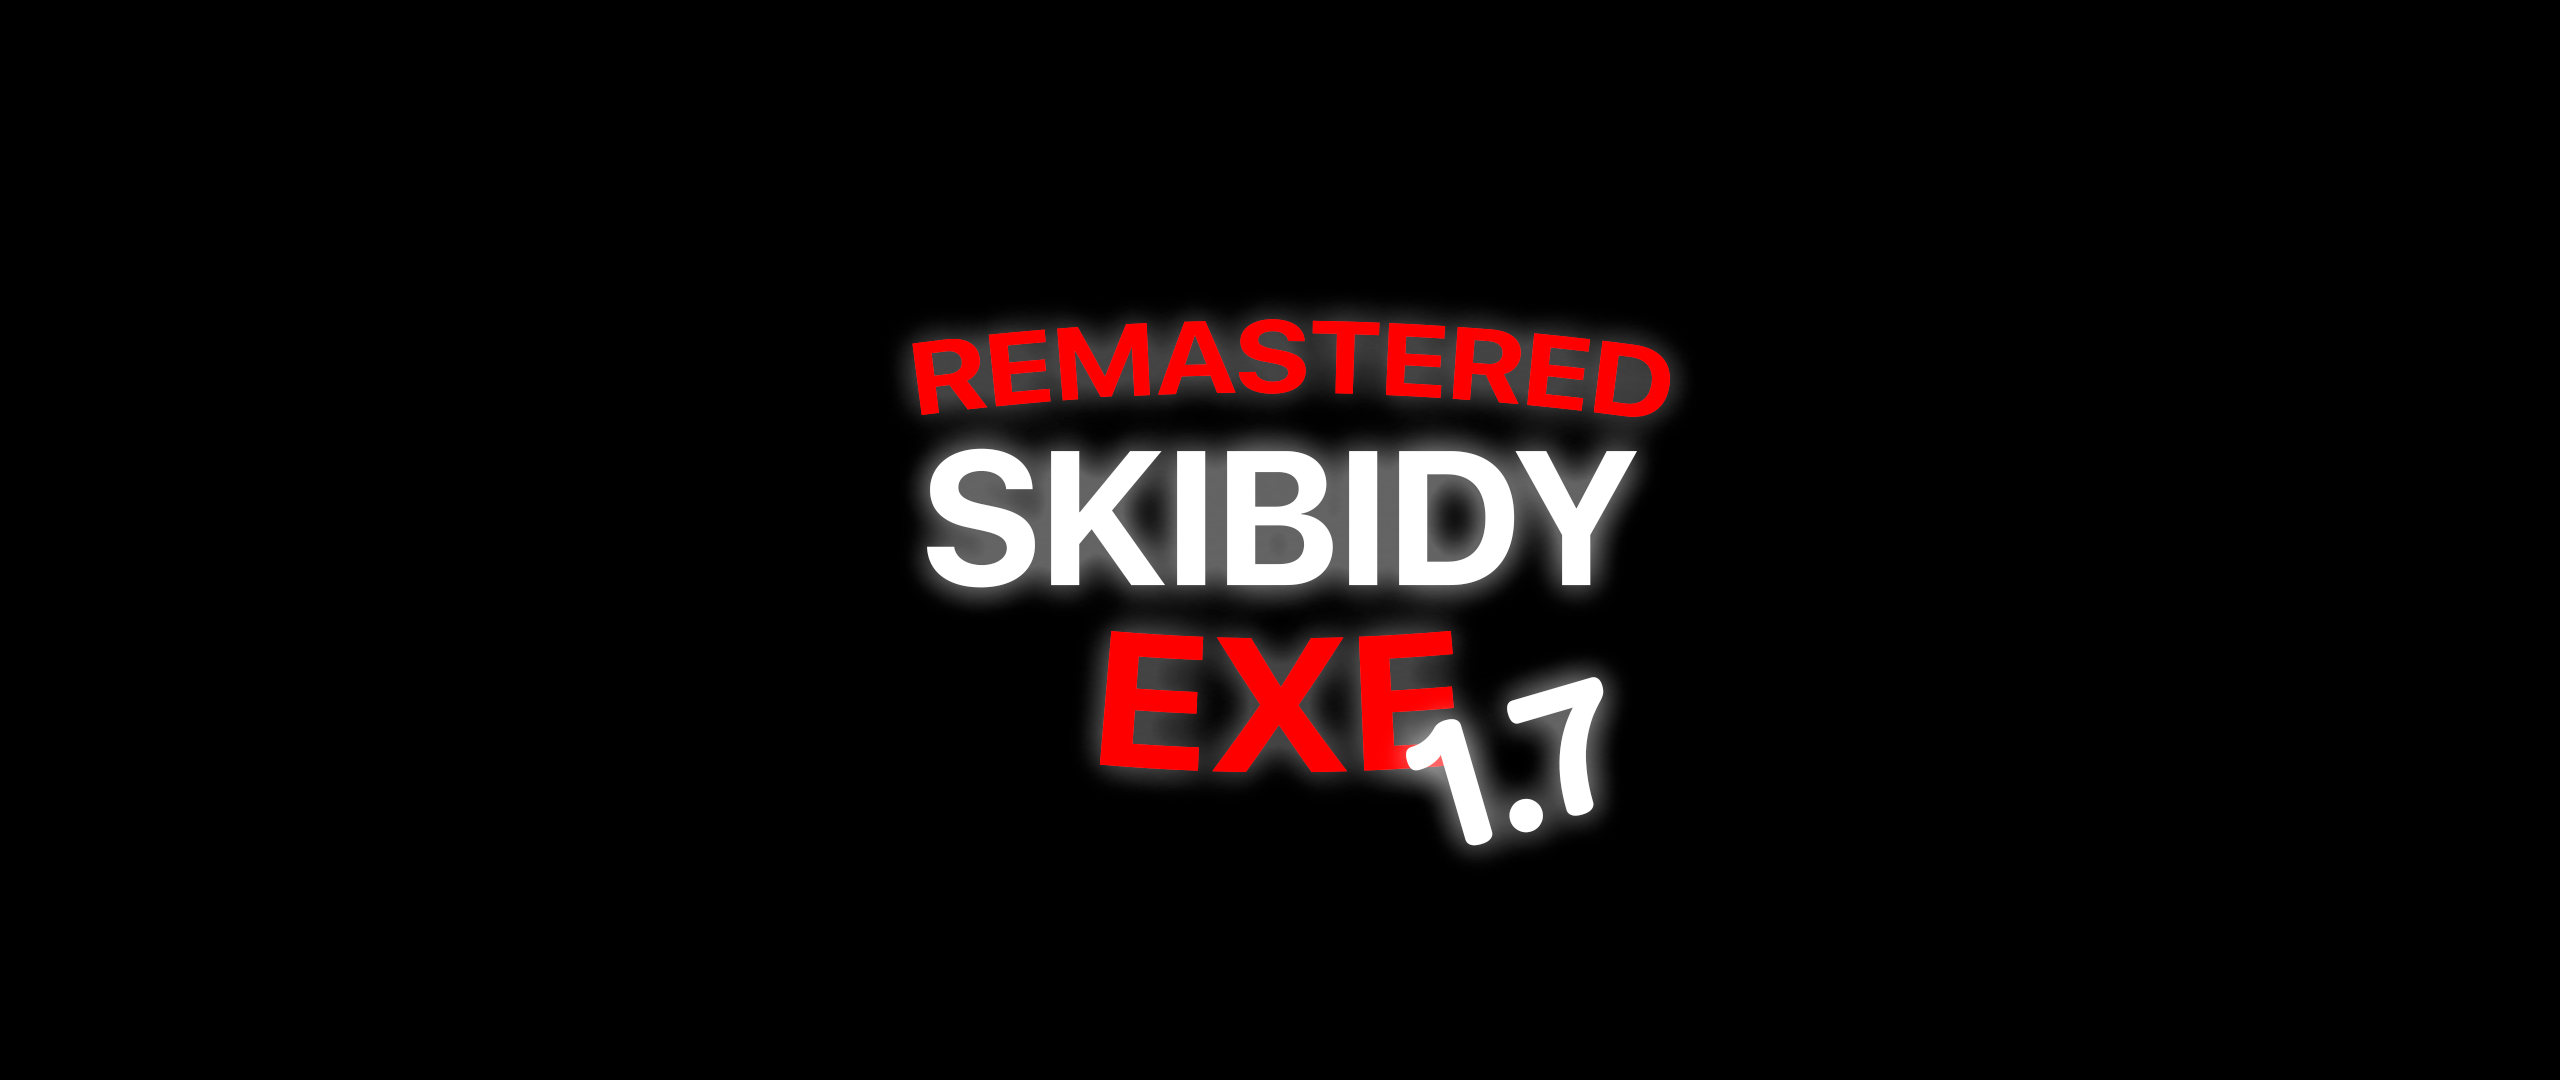 Skibidy EXE Remastered DEMO